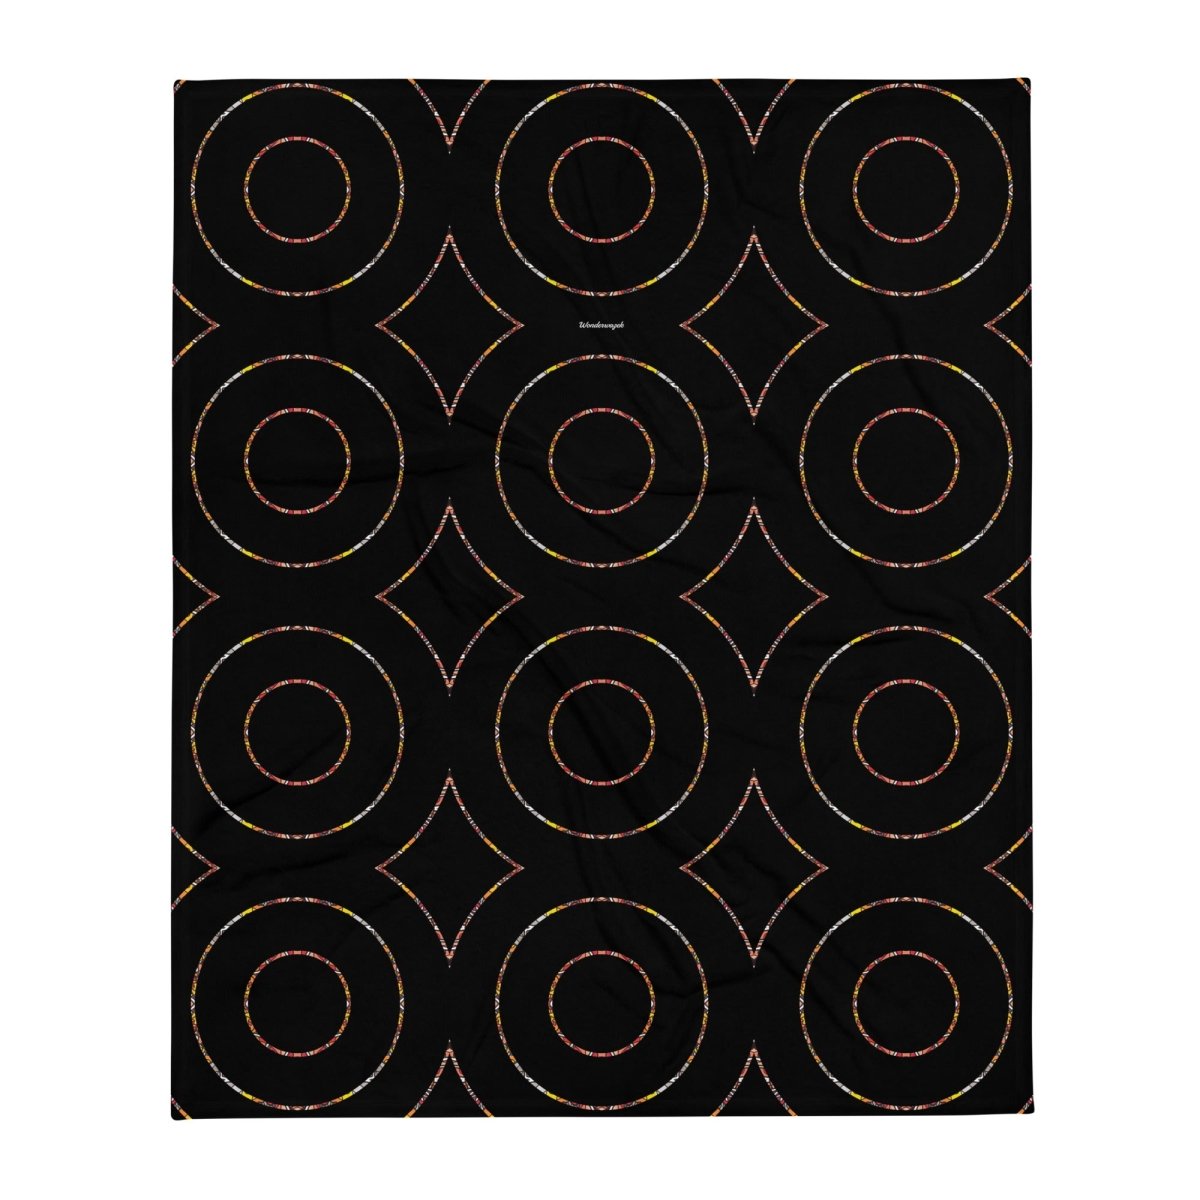 Decke • dezente Kreise – orange, schwarz - Wonderwazek